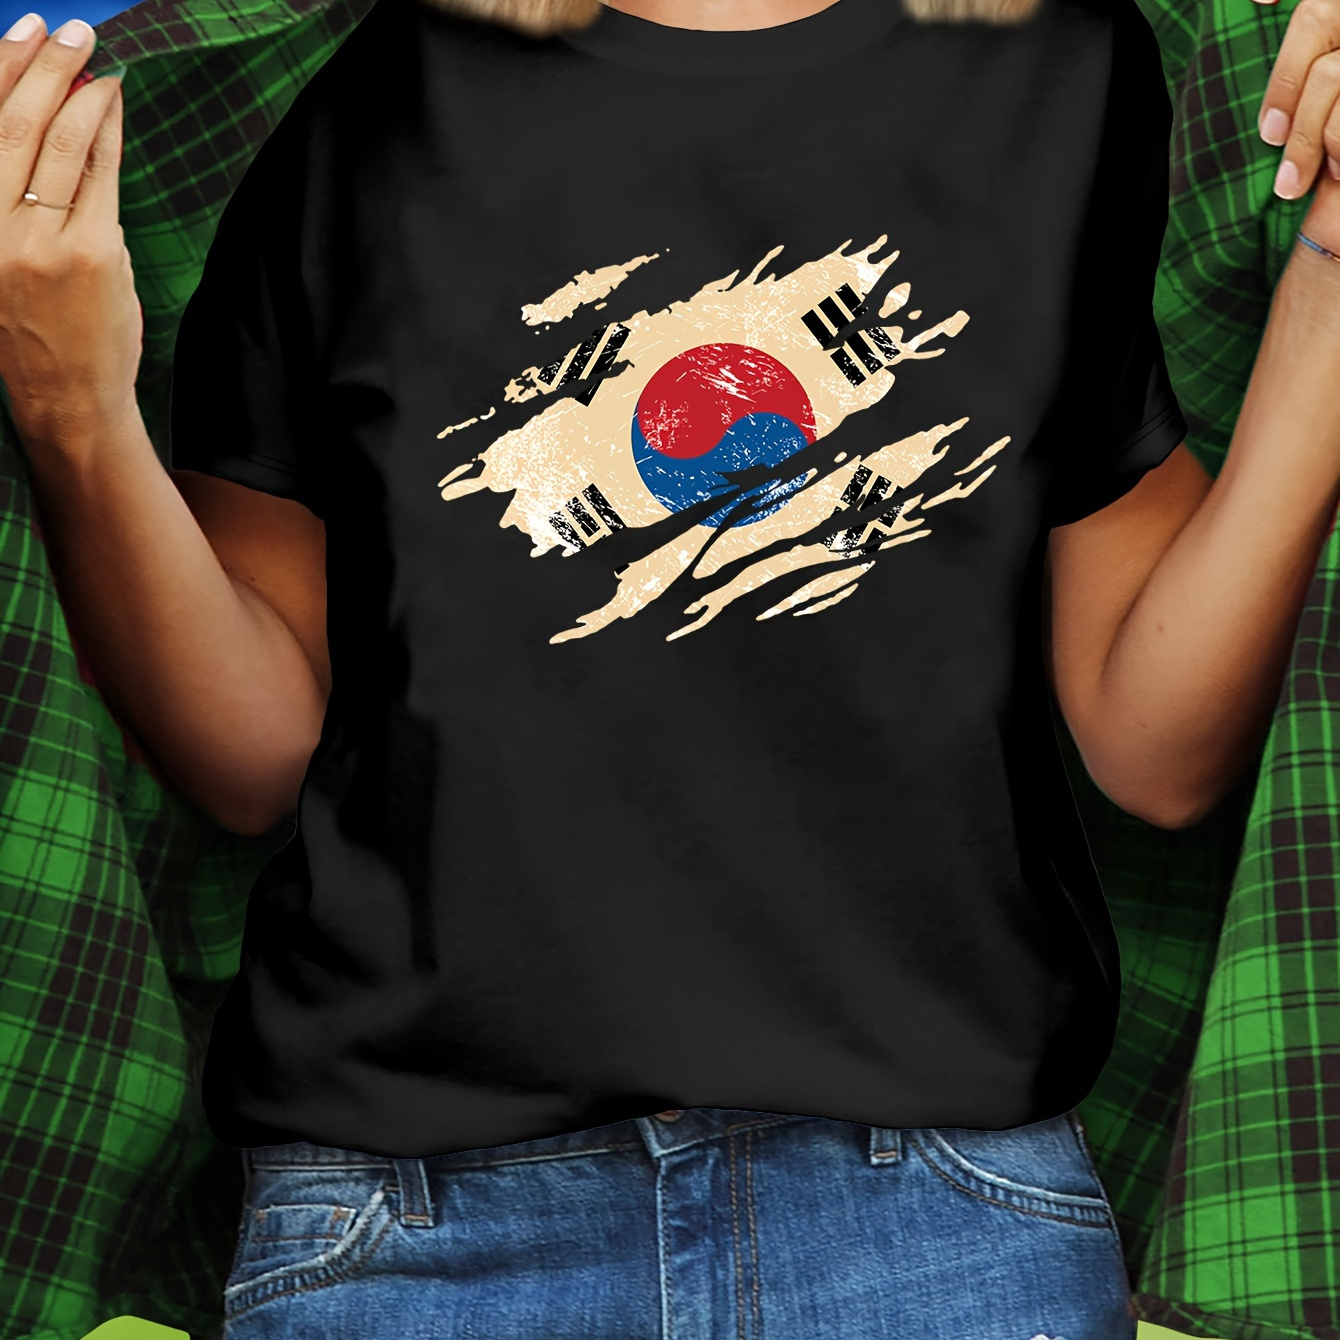 

1pc, Korean National Team T-shirt, Vintage South Korean Flag Design, Casual Wear For Euro Sports Event